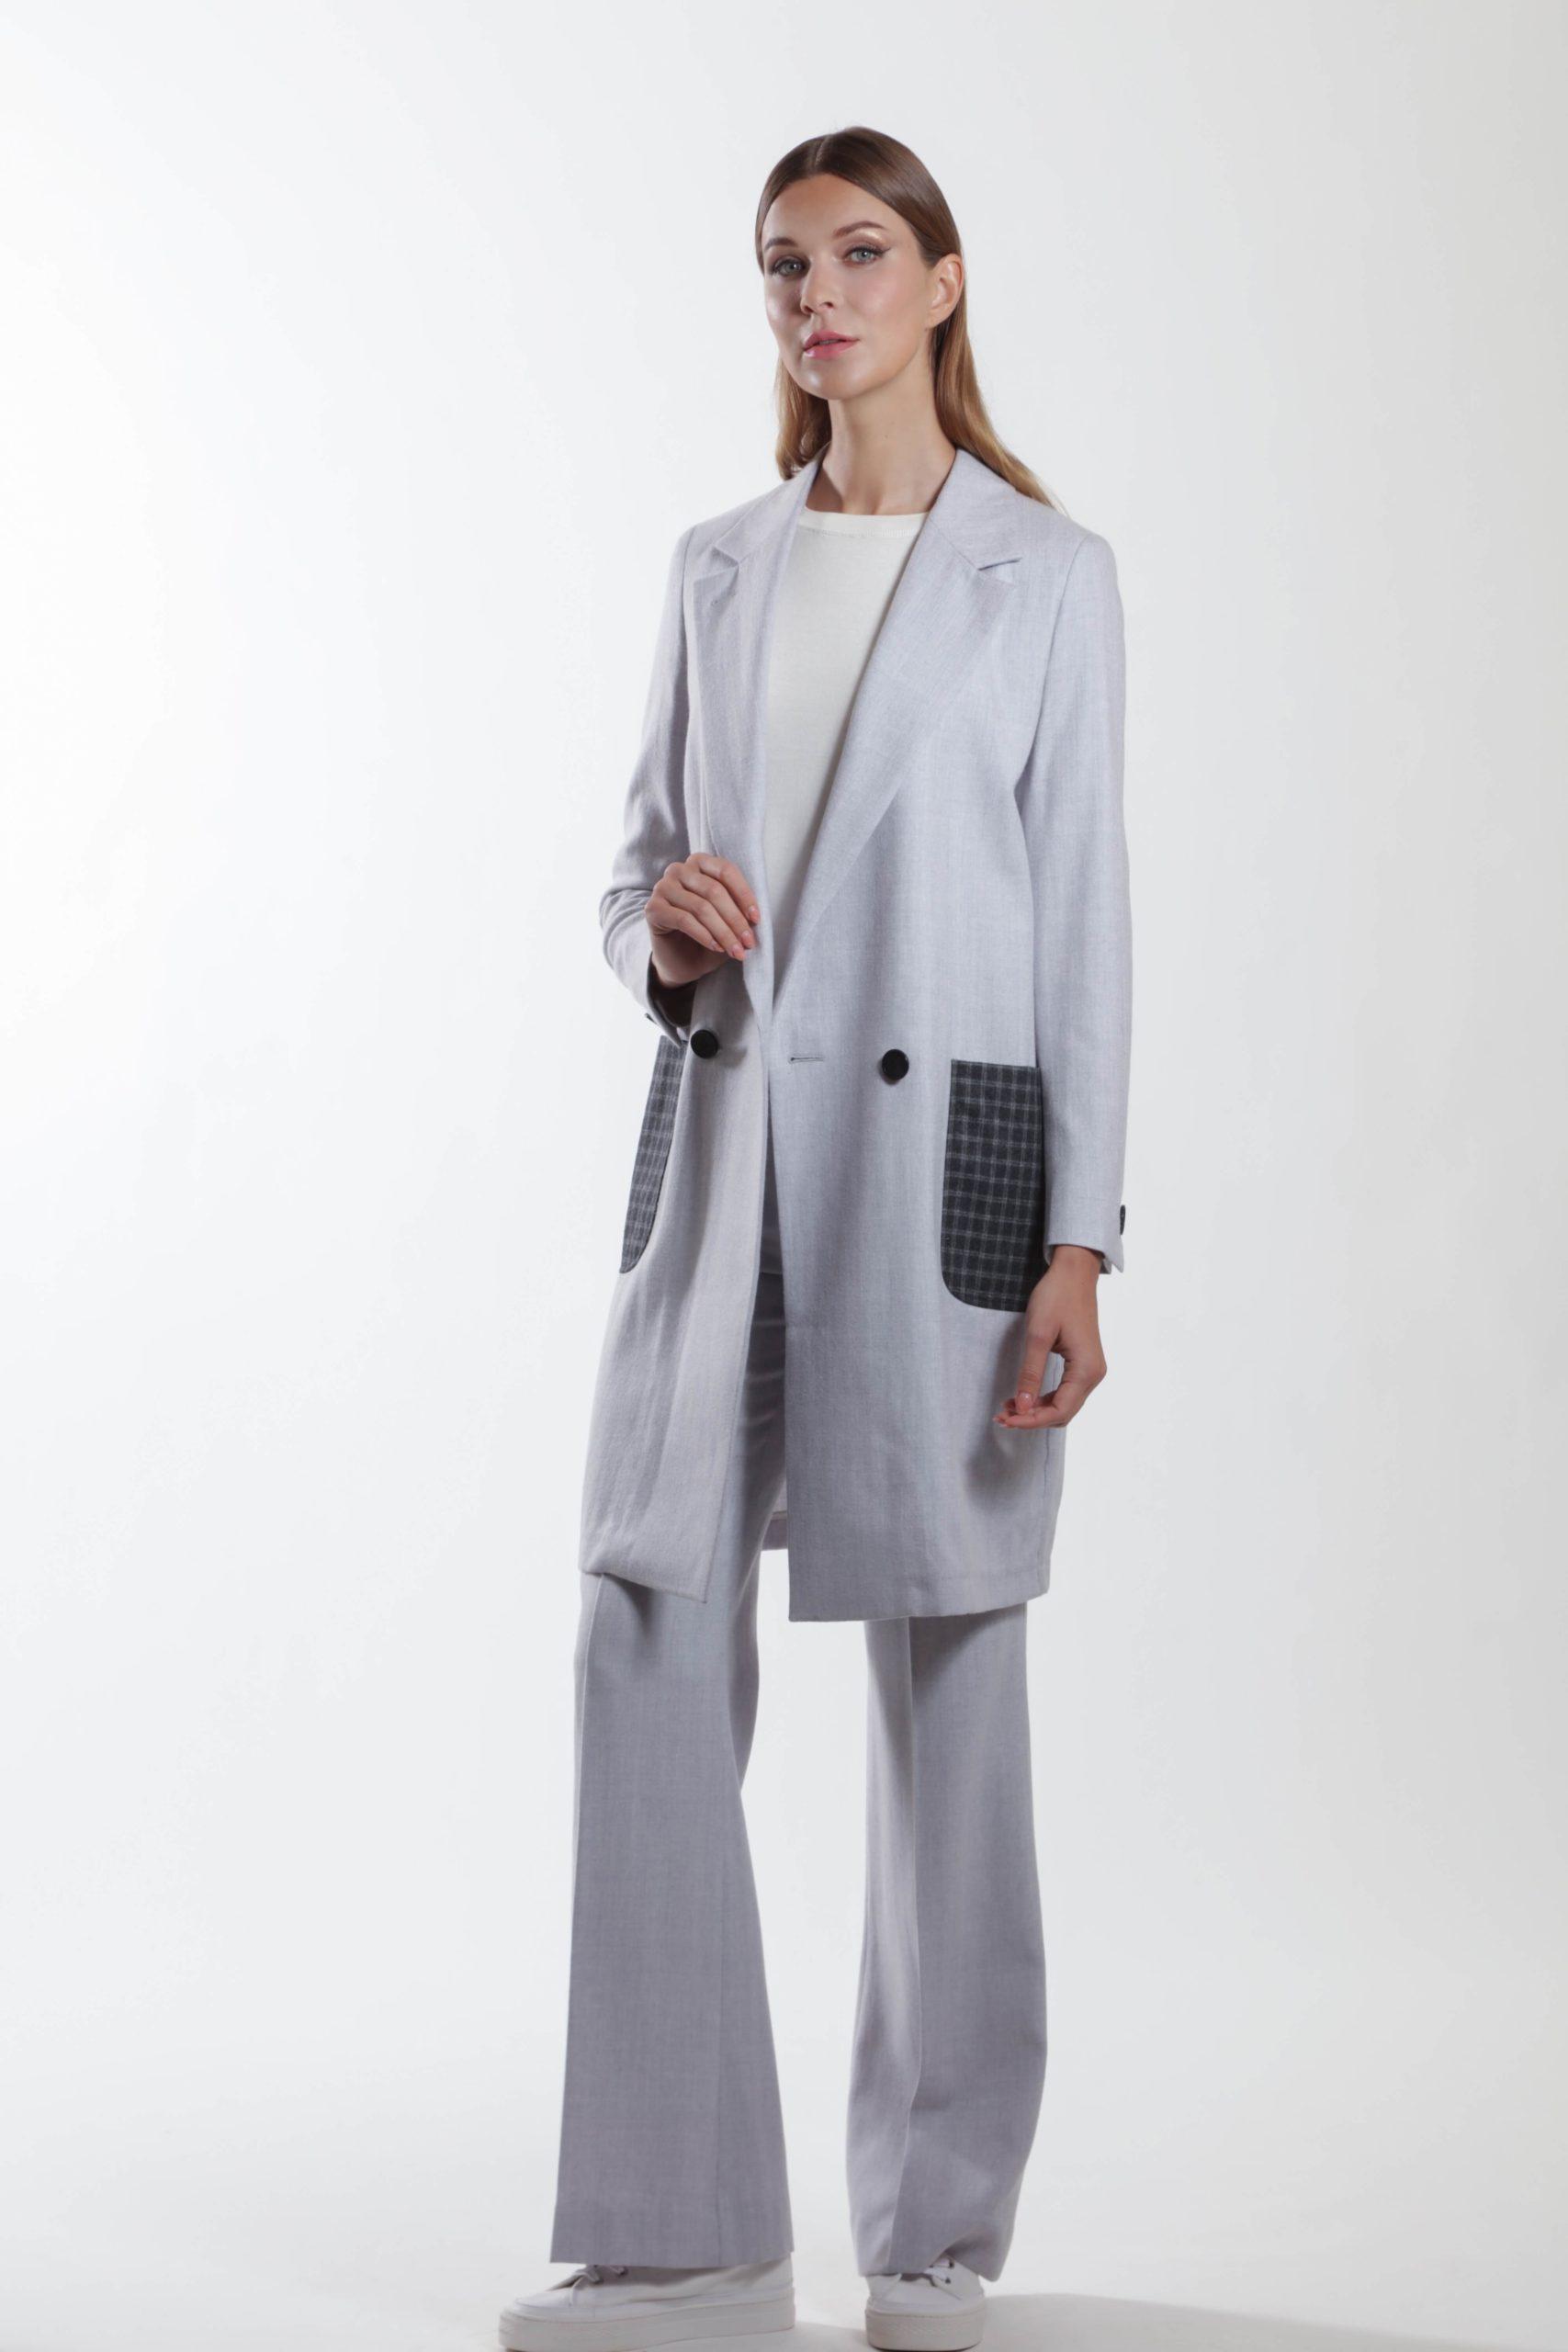 Bordeaux – Flared-leg wool suit trousers in sky grey herringbone